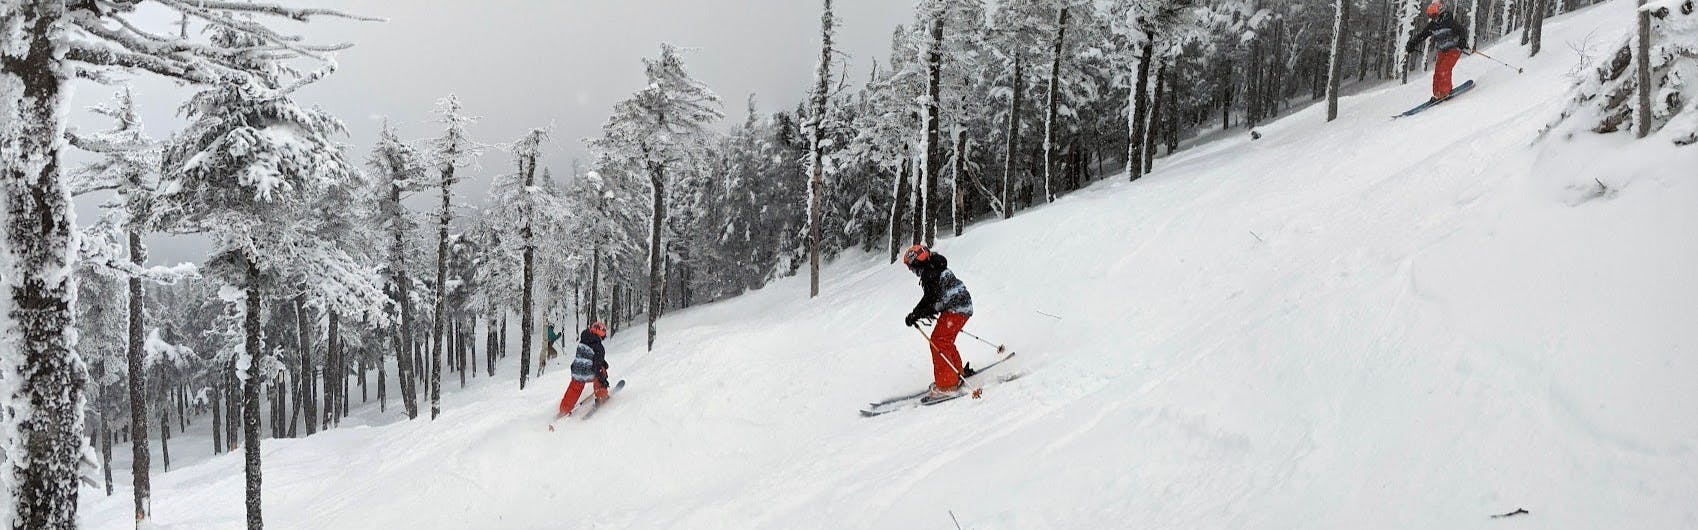 Two skiers both turn down a snowy, tree filled ski run. 